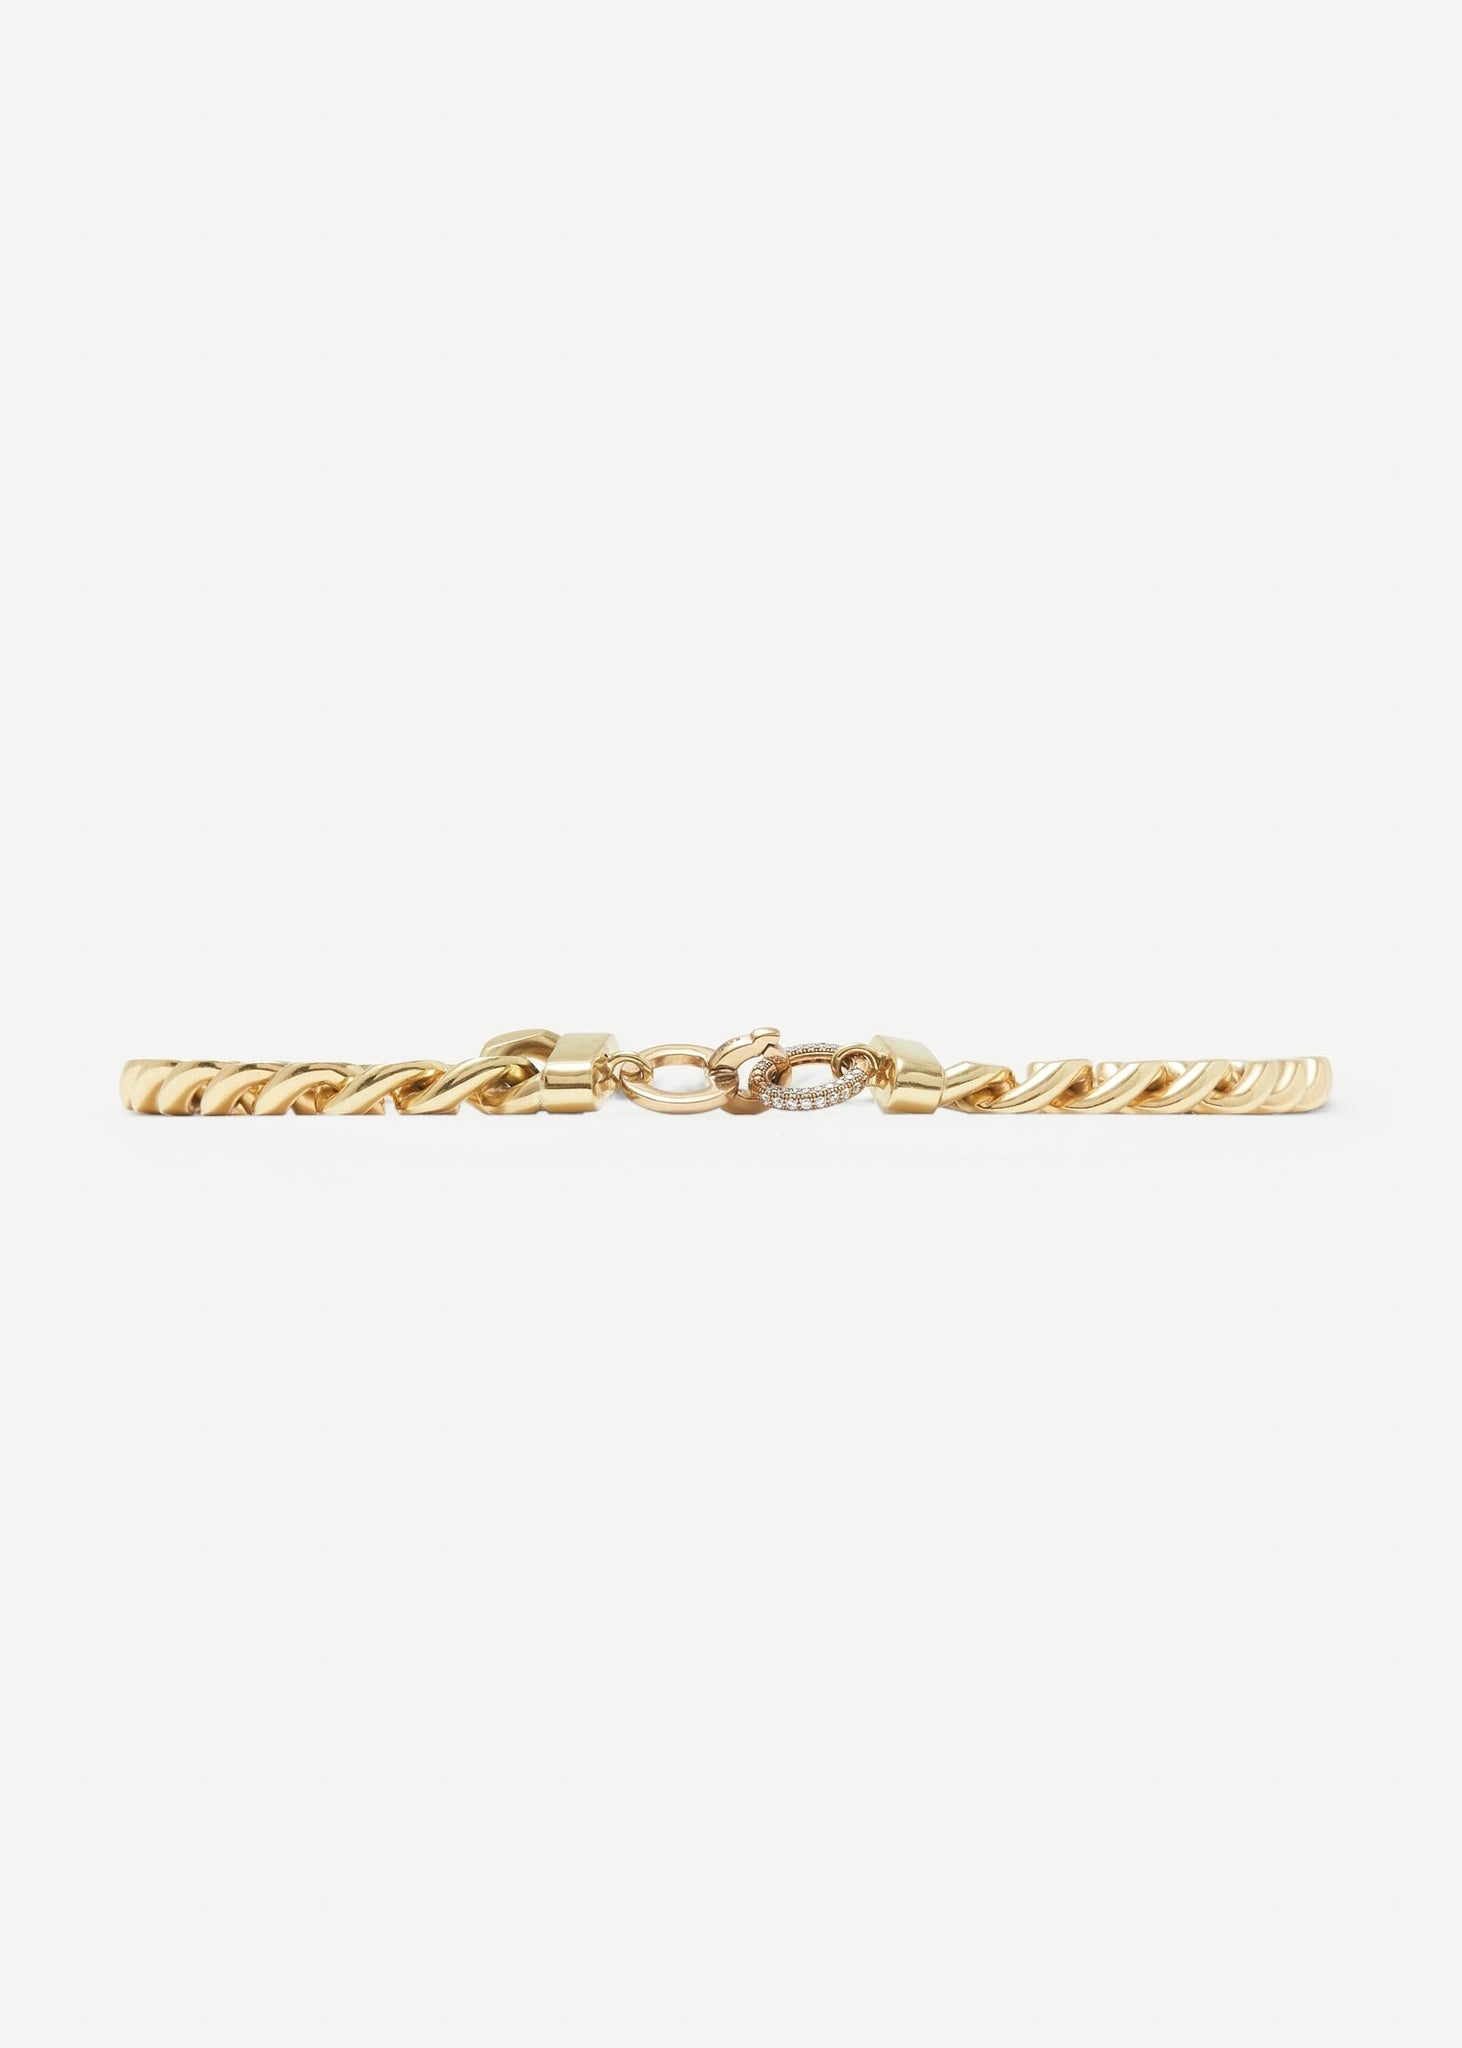 Molded Chain Necklace Maxi - Necklaces - Cornelia Webb - 3